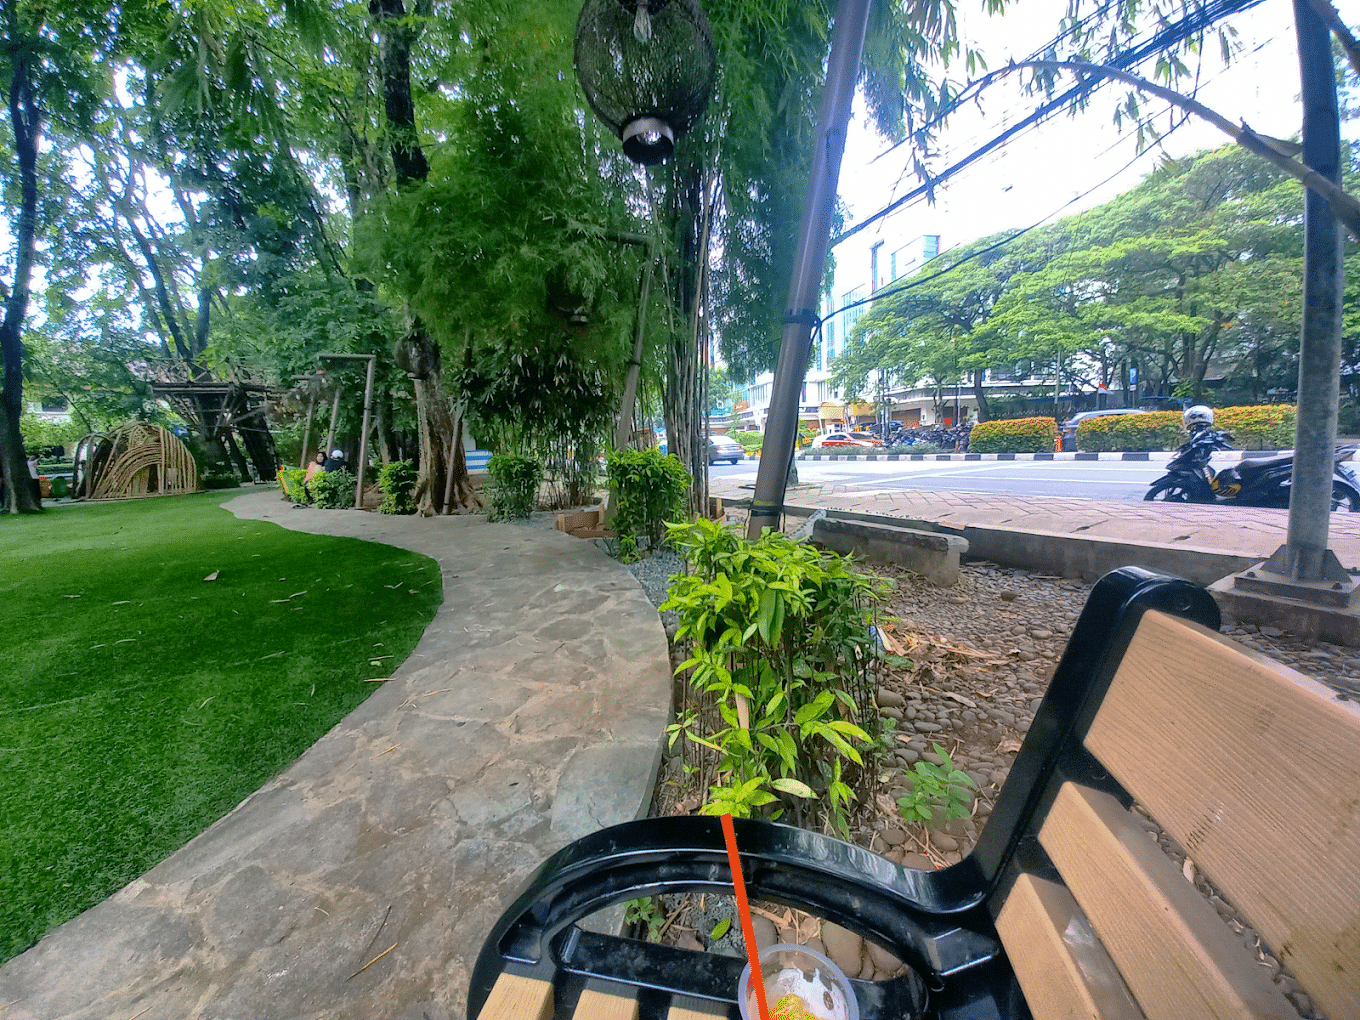 Tempat wisata di Tangerang, Taman Bambu